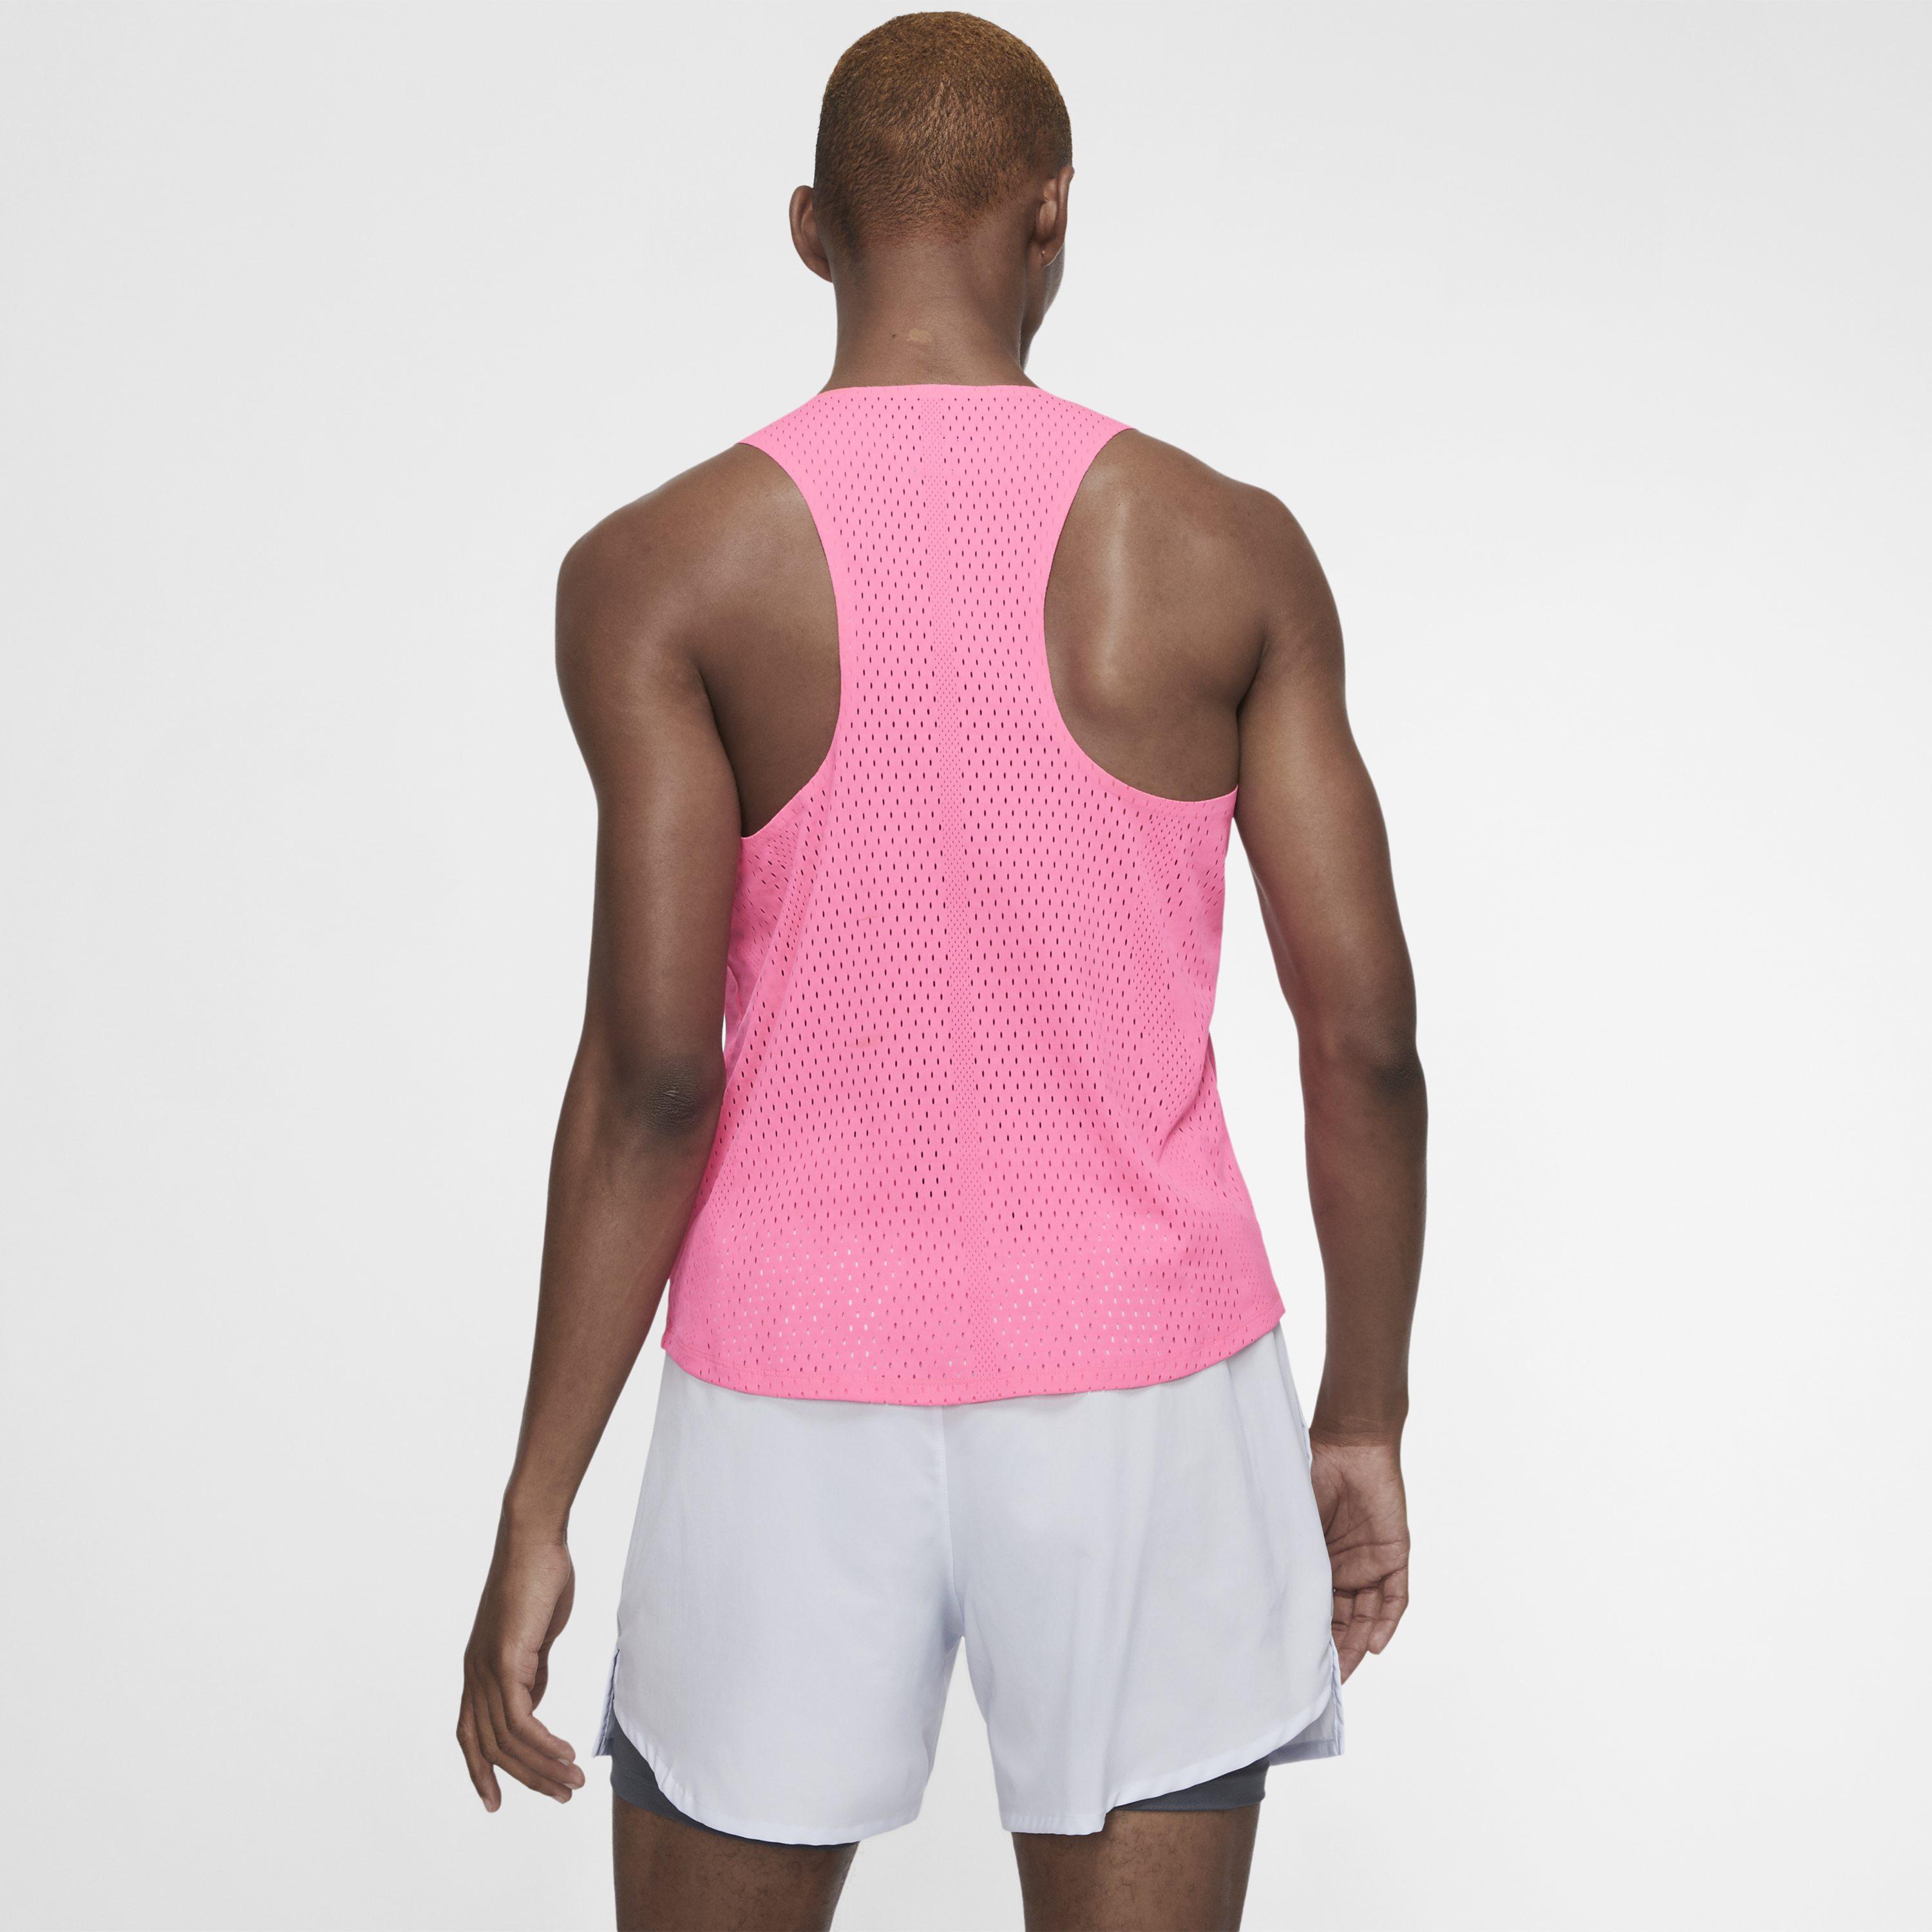 Nike Aeroswift Running Singlet in Pink for Men - Lyst